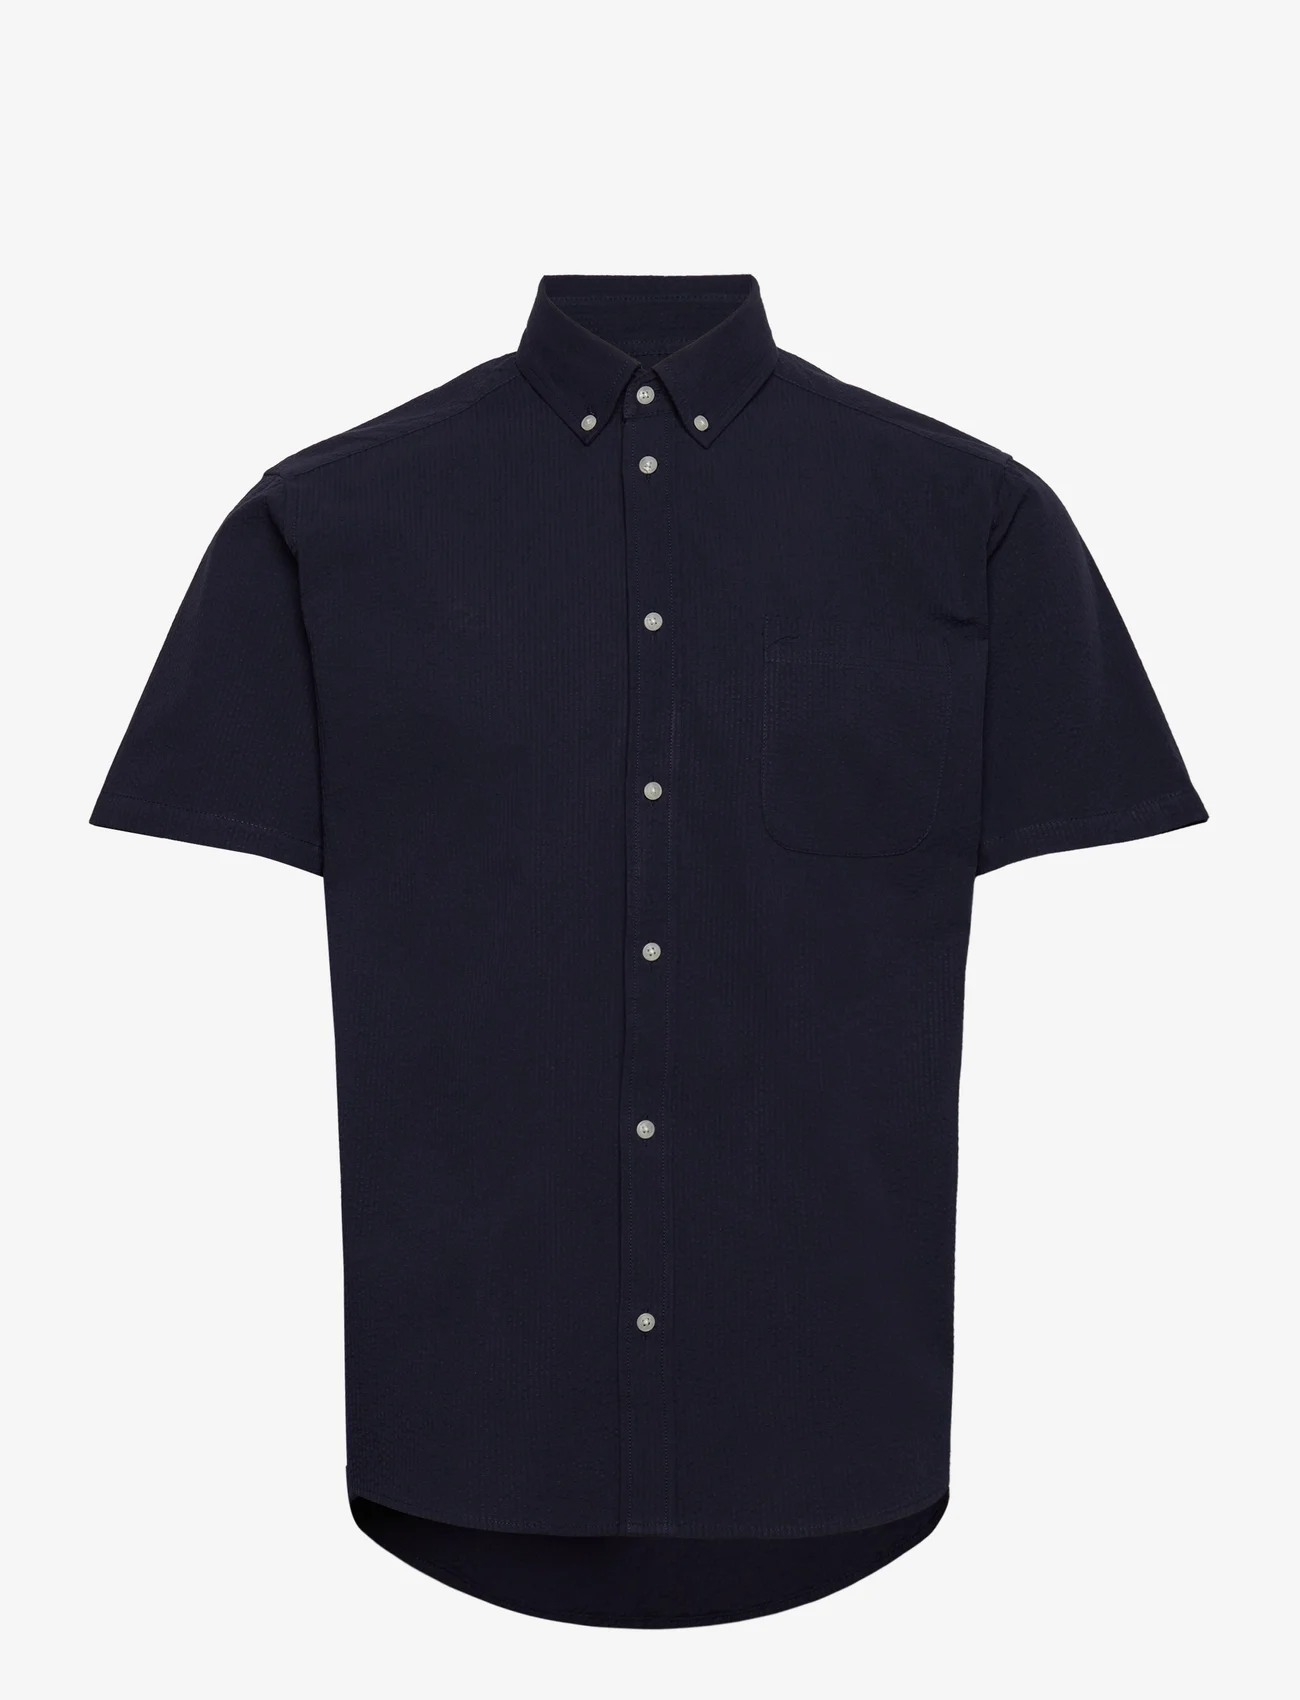 Les Deux - Louis Seersucker SS Shirt - basic shirts - dark navy - 0